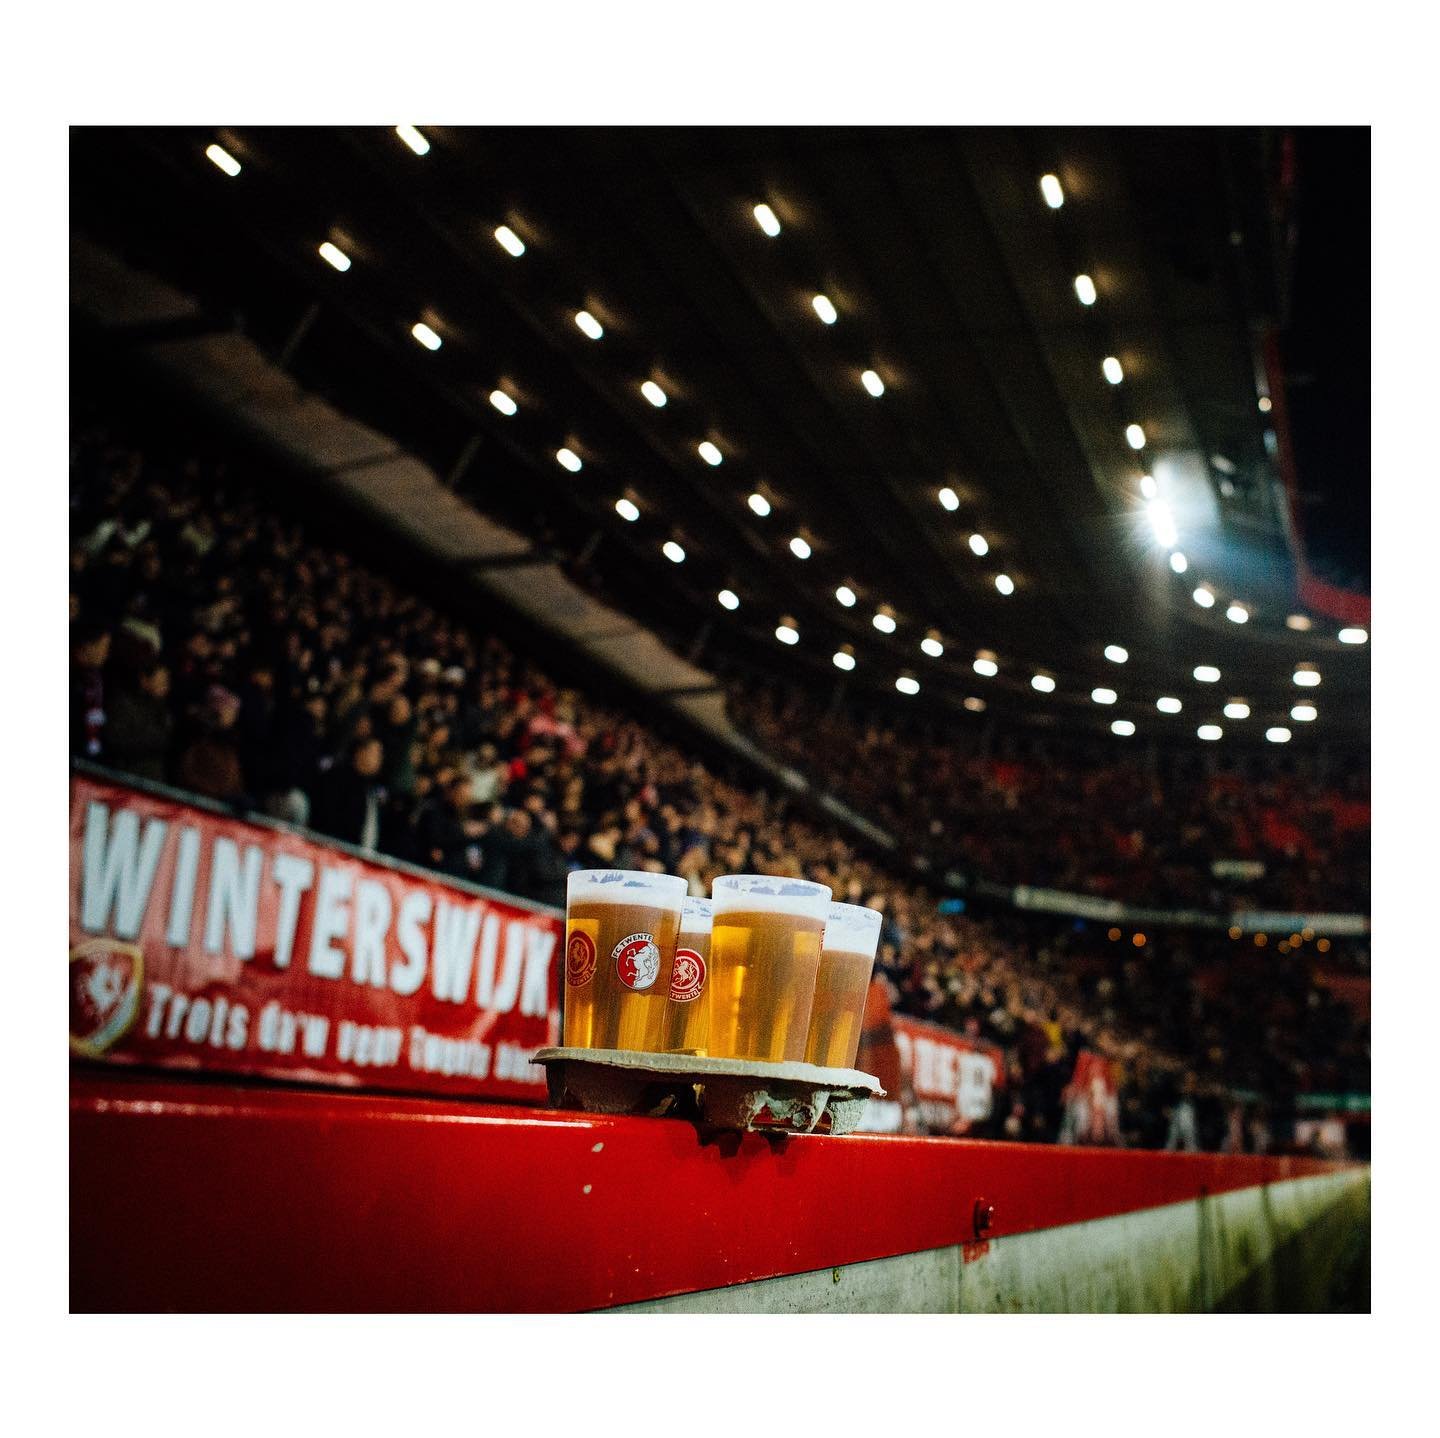 FC Twente - Sparta on Leica M #leicam10r
.
.
.
.
.
#sportfotografie #sportsphotography #leicasportsphotography #leicasports #summicron28 #28mmsummicron #50mmsummilux #summilux50 #footballphotography #lfigallery 
.
📸 @vincentriemersma